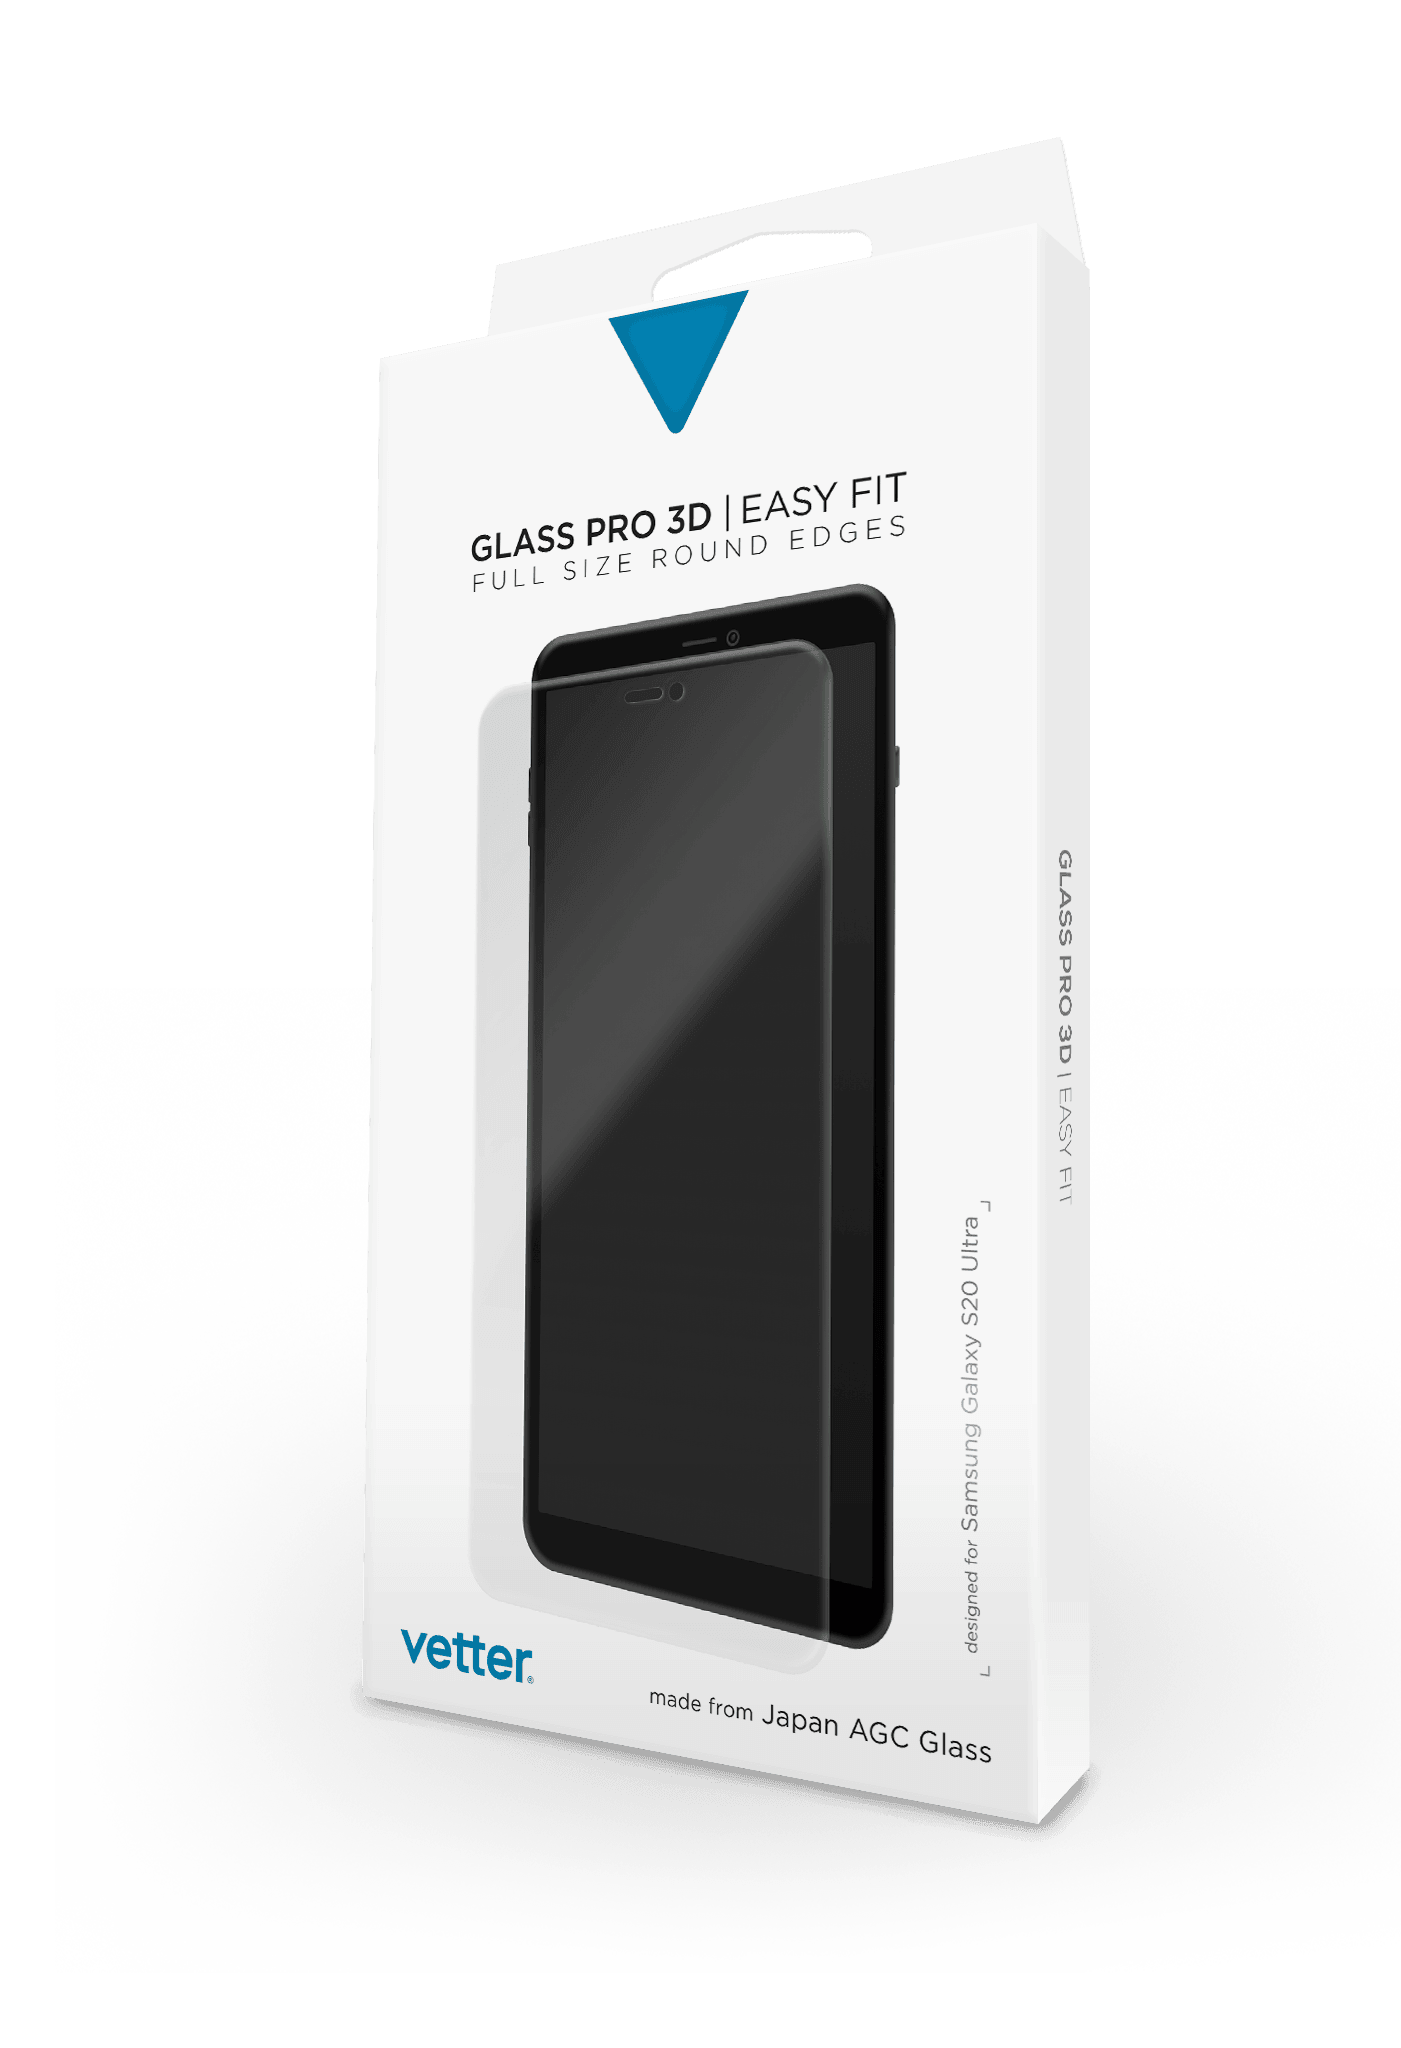 Folie Protectie Ecran Samsung Galaxy S20 Ultra, 3D Tempered Glass Easy Fit, Negru - vetter.ro